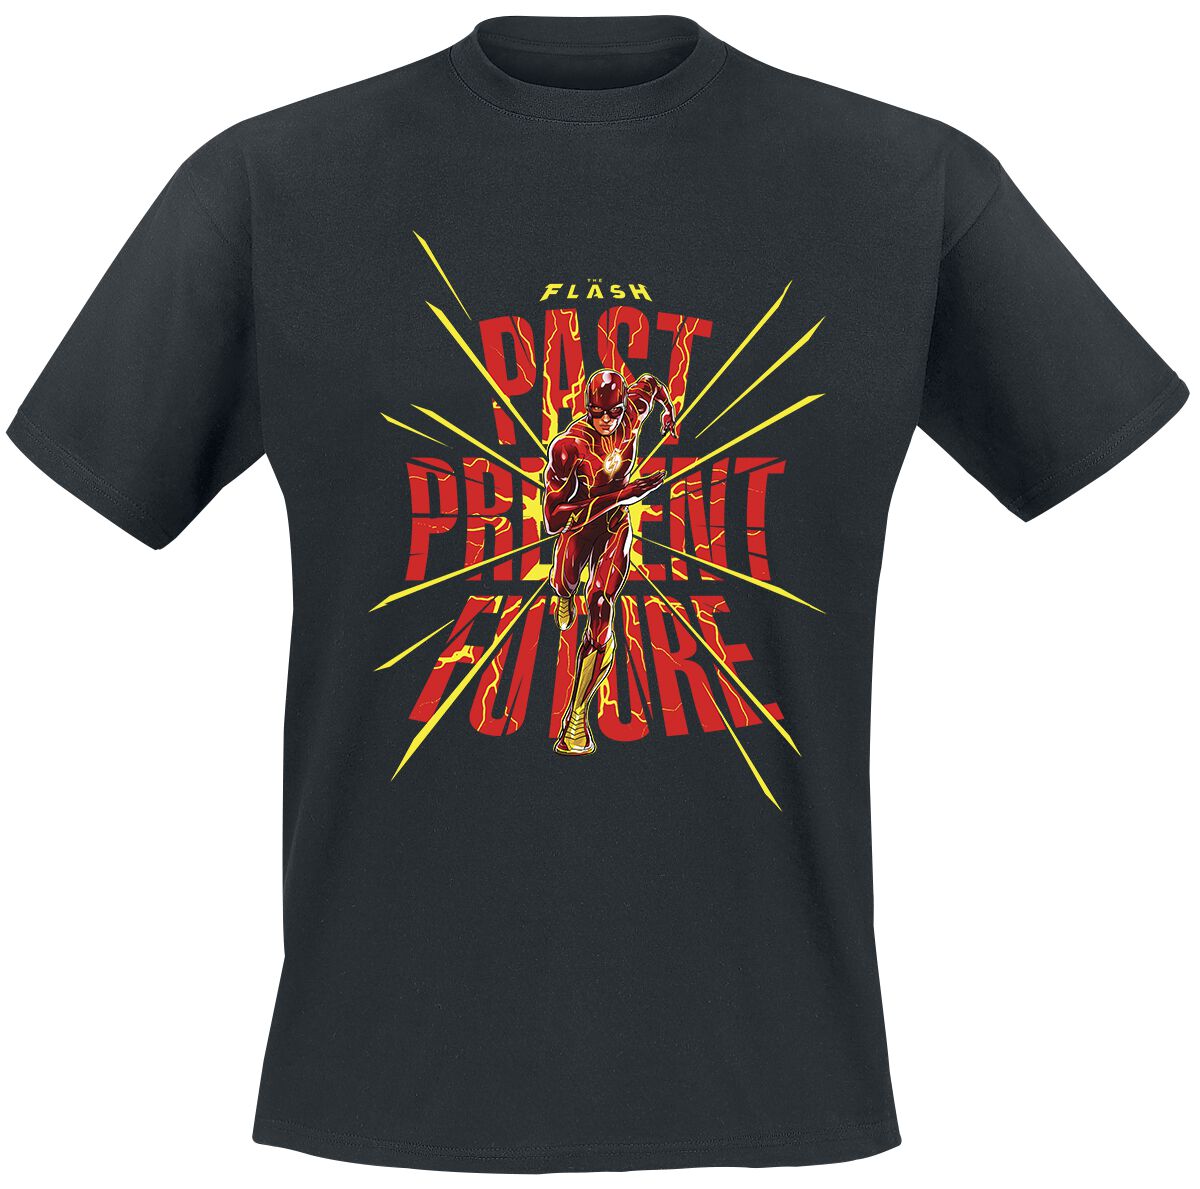 The Flash Past Present Future T-Shirt schwarz in XL